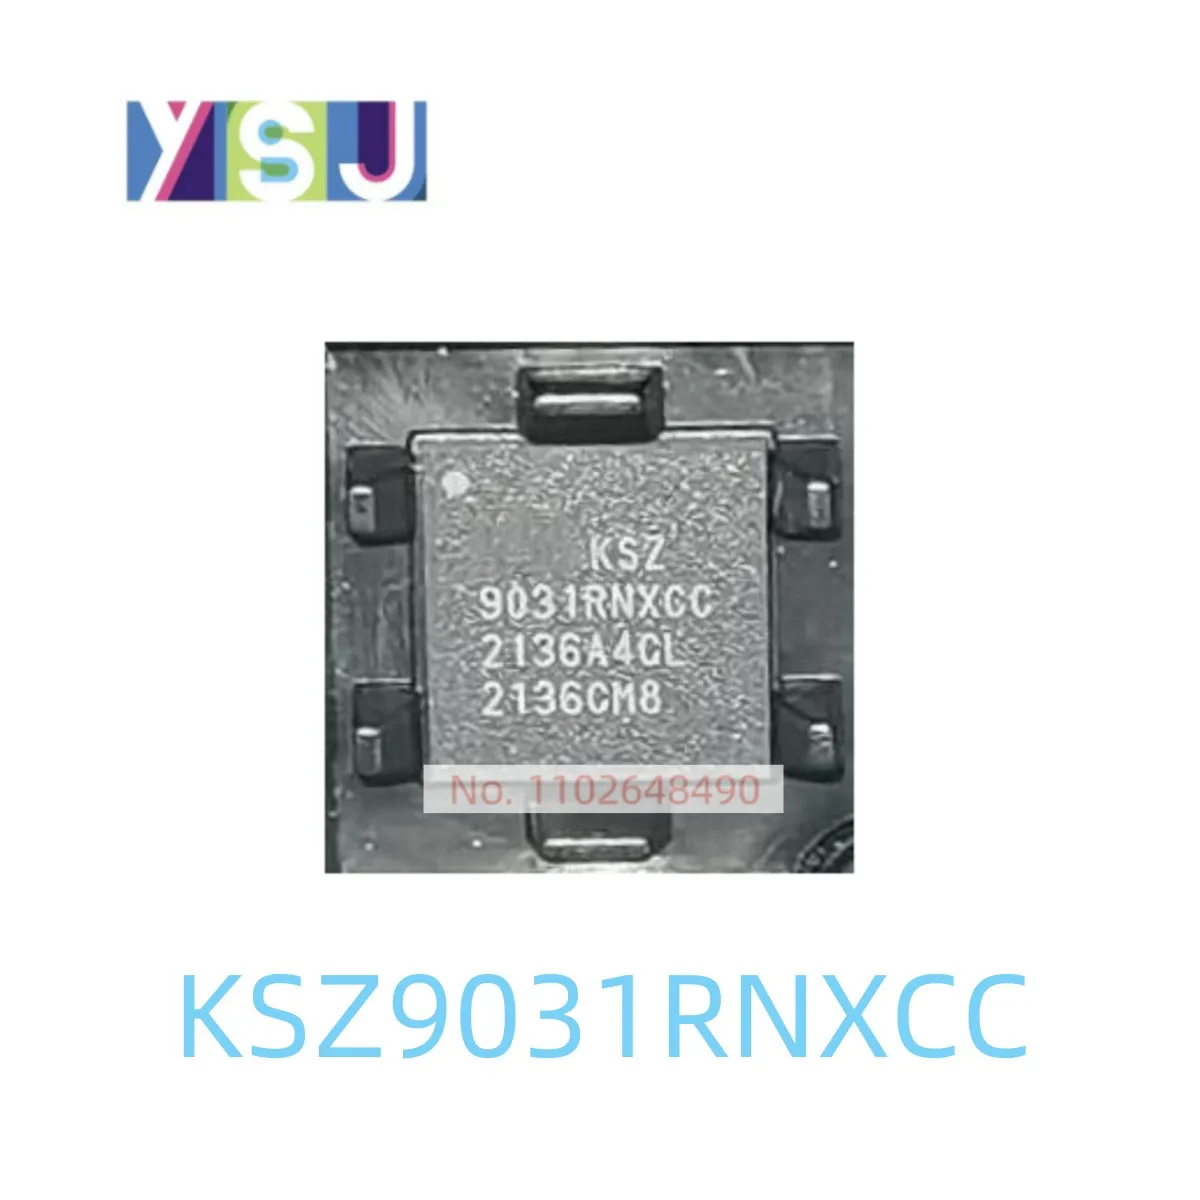 

KSZ9031RNXCC IC Brand New Microcontroller EncapsulationQFN-48